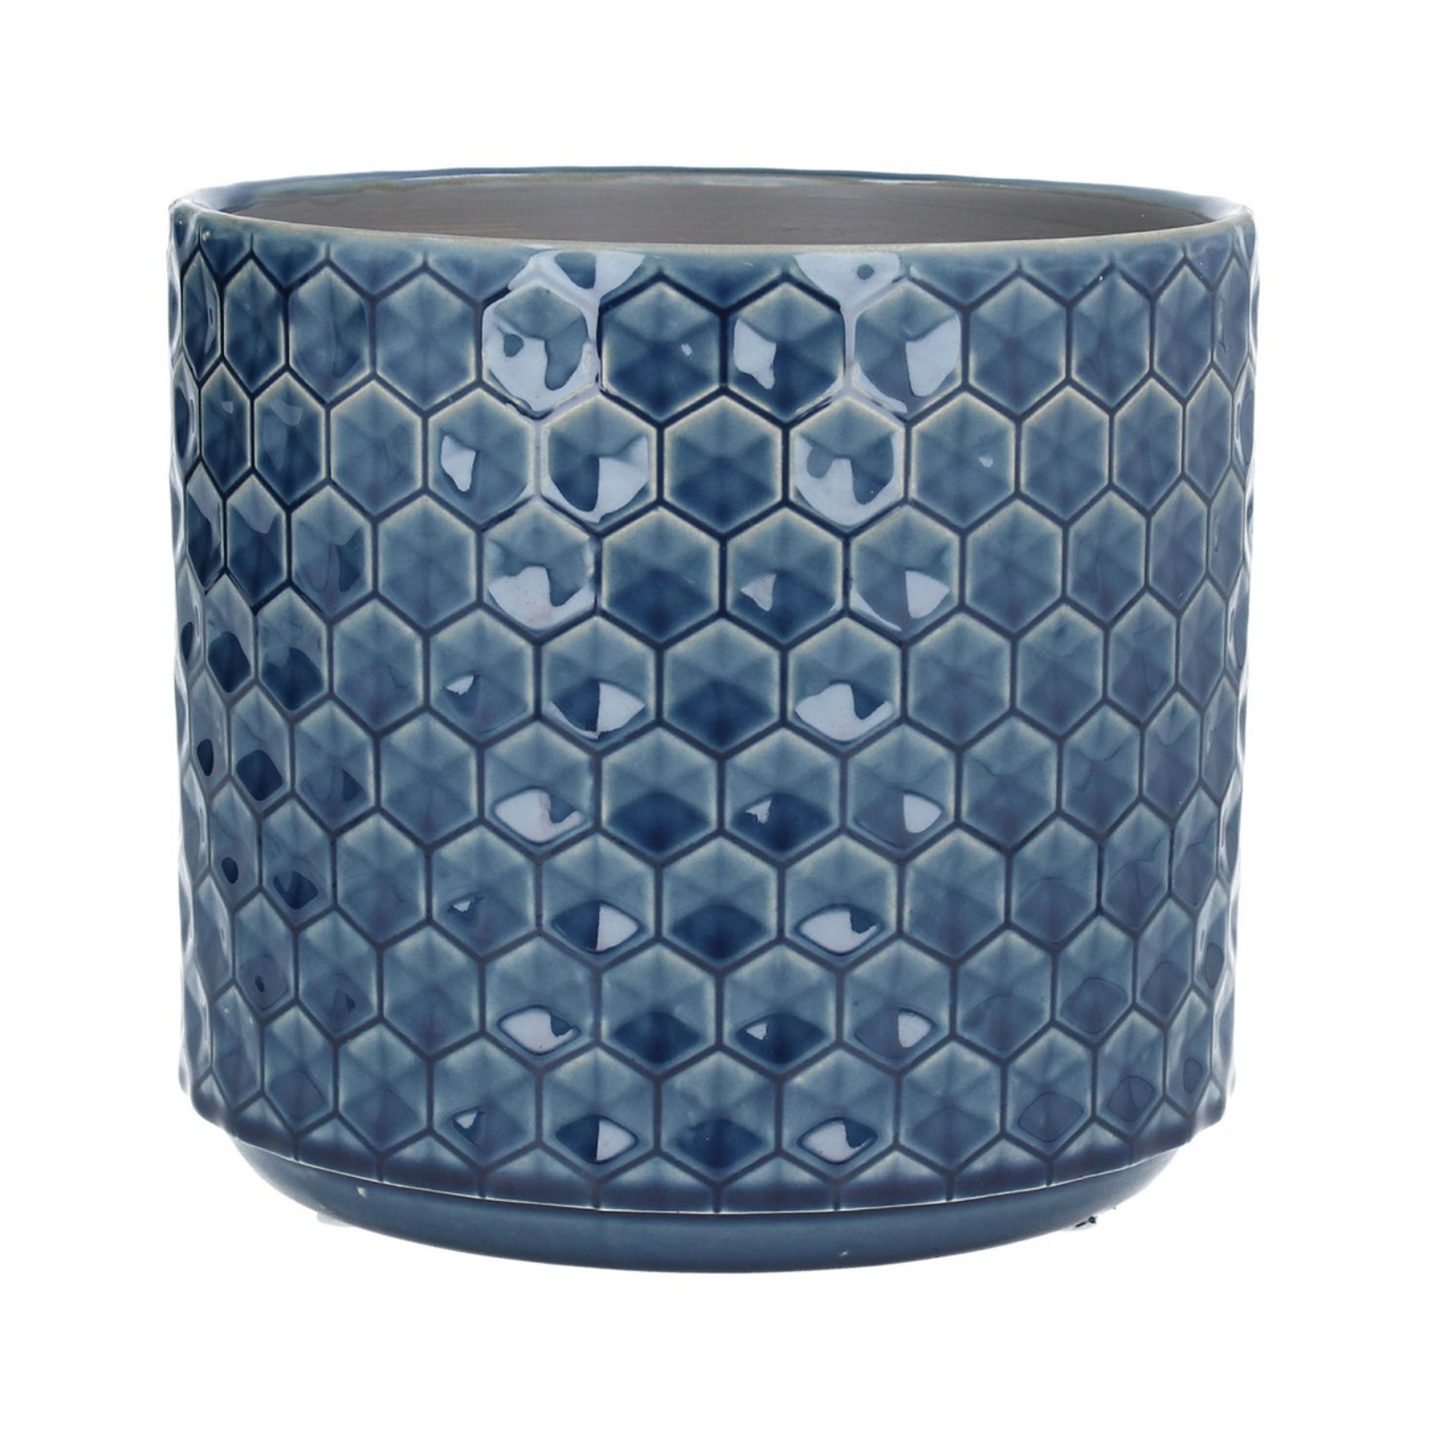 Ceramic Pot Cover 20cm - Navy Honeycomb